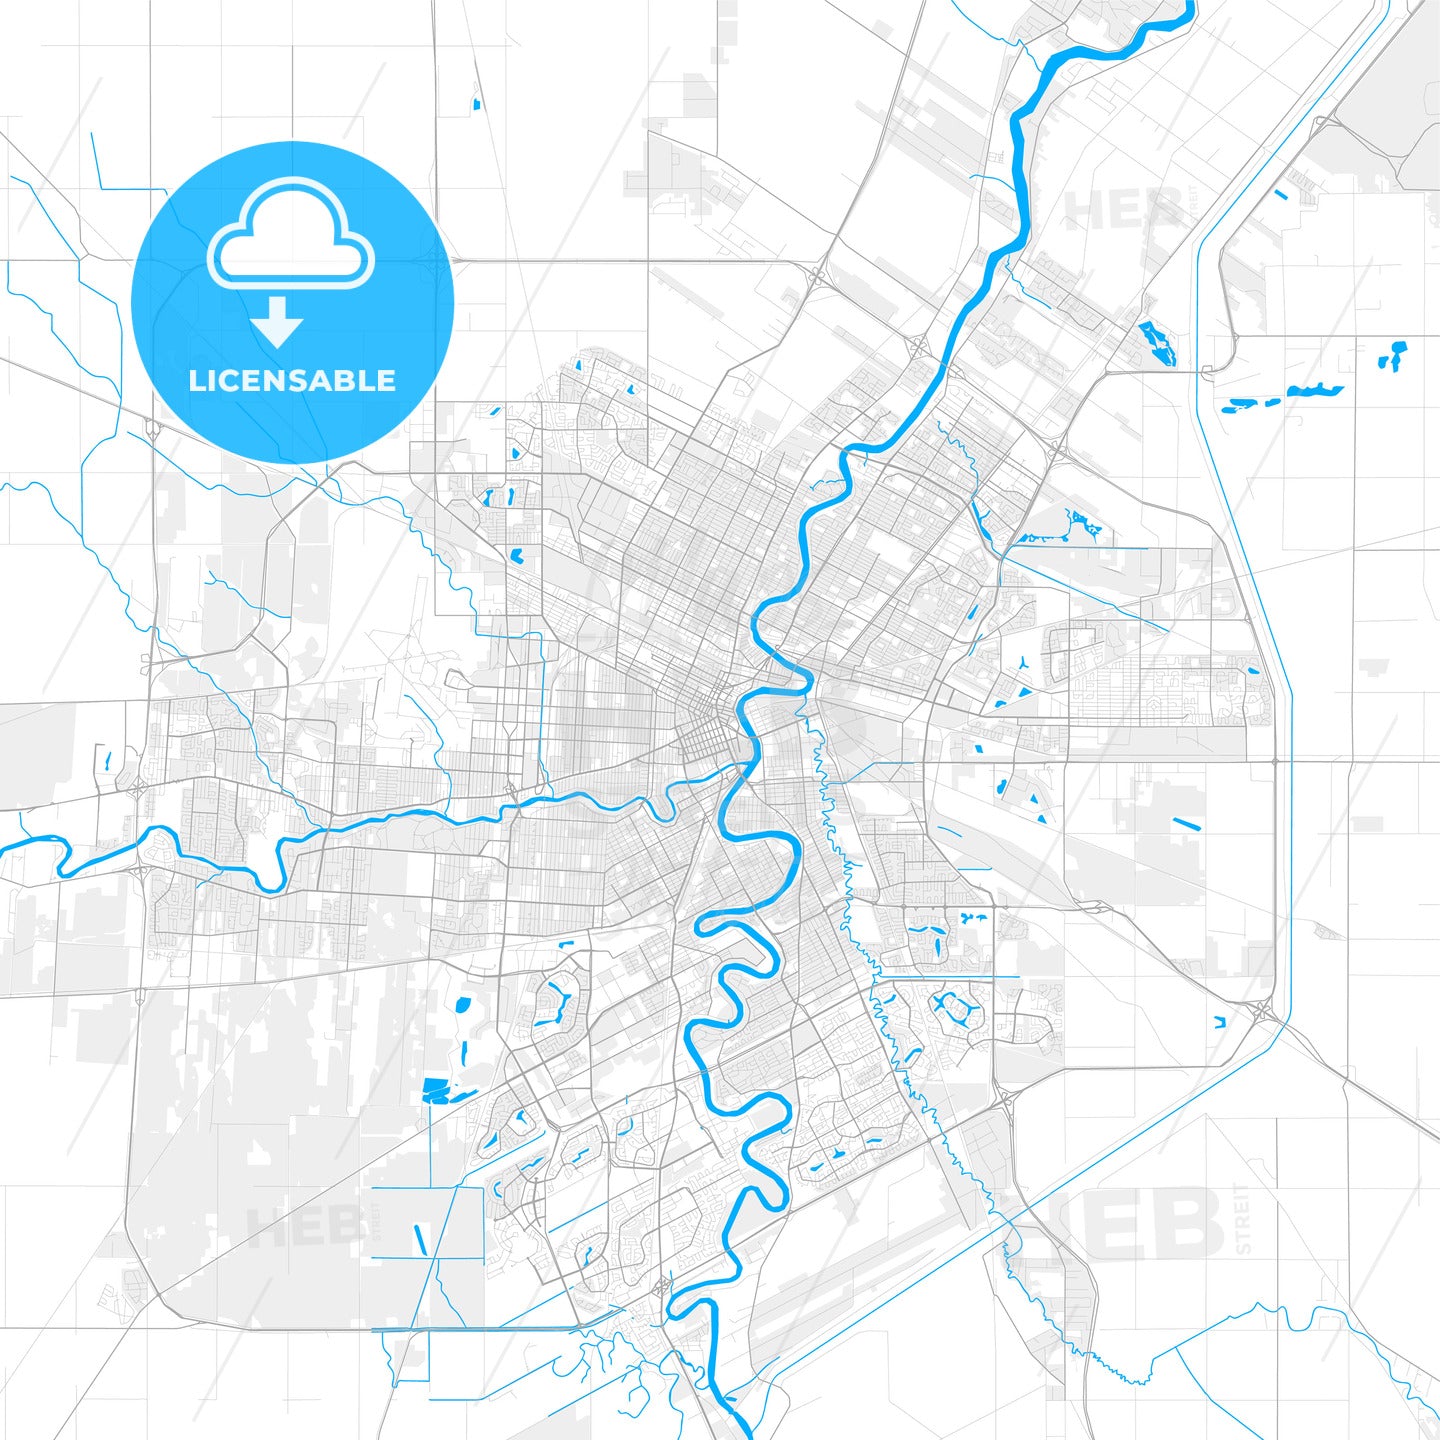 Rich detailed vector map of Winnipeg, Manitoba, Canada